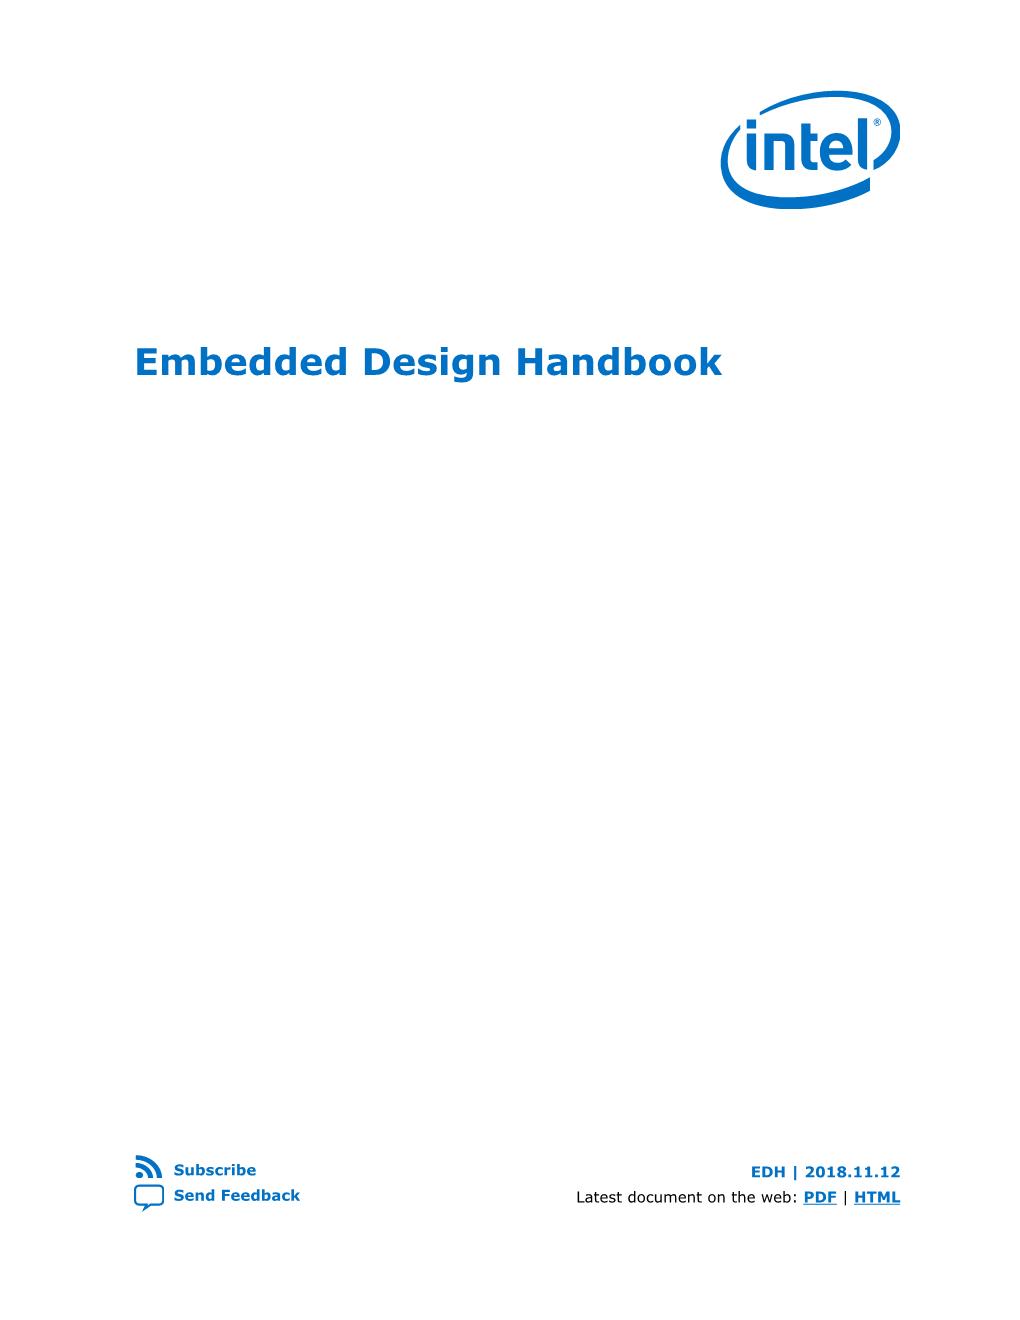 Embedded Design Handbook (Nios and Platform Designer)